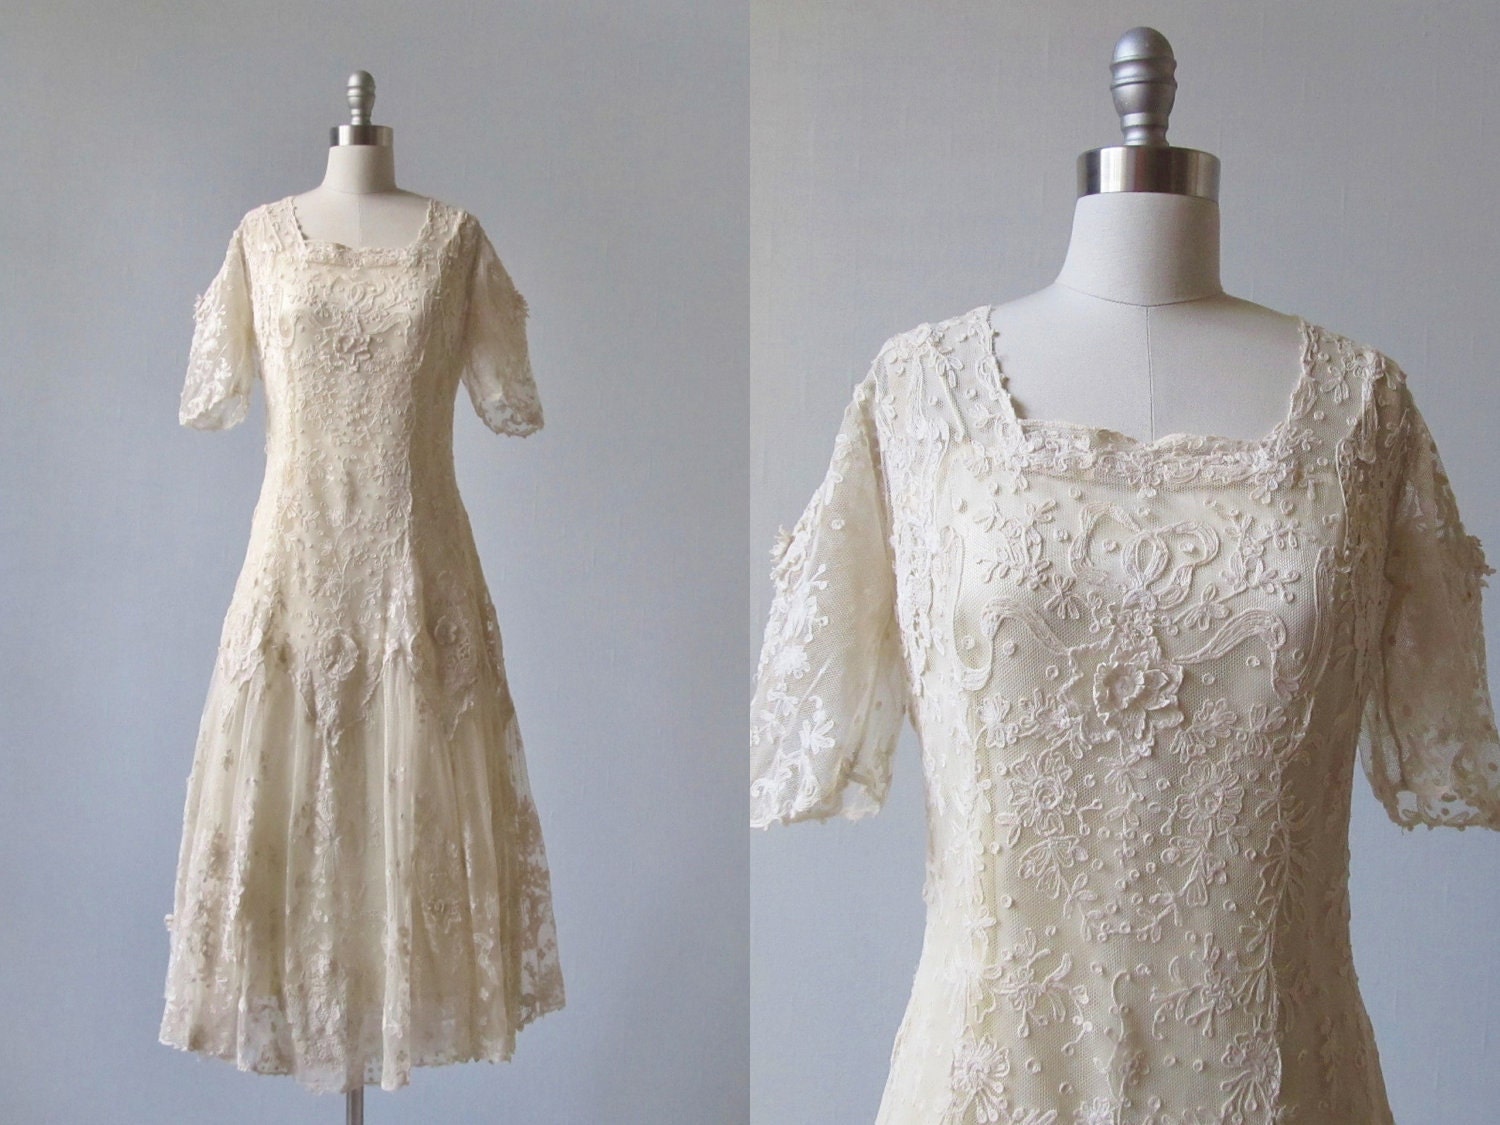 Tambour Lace Gown / 1920s Tambour Lace Tea Dress / Wedding